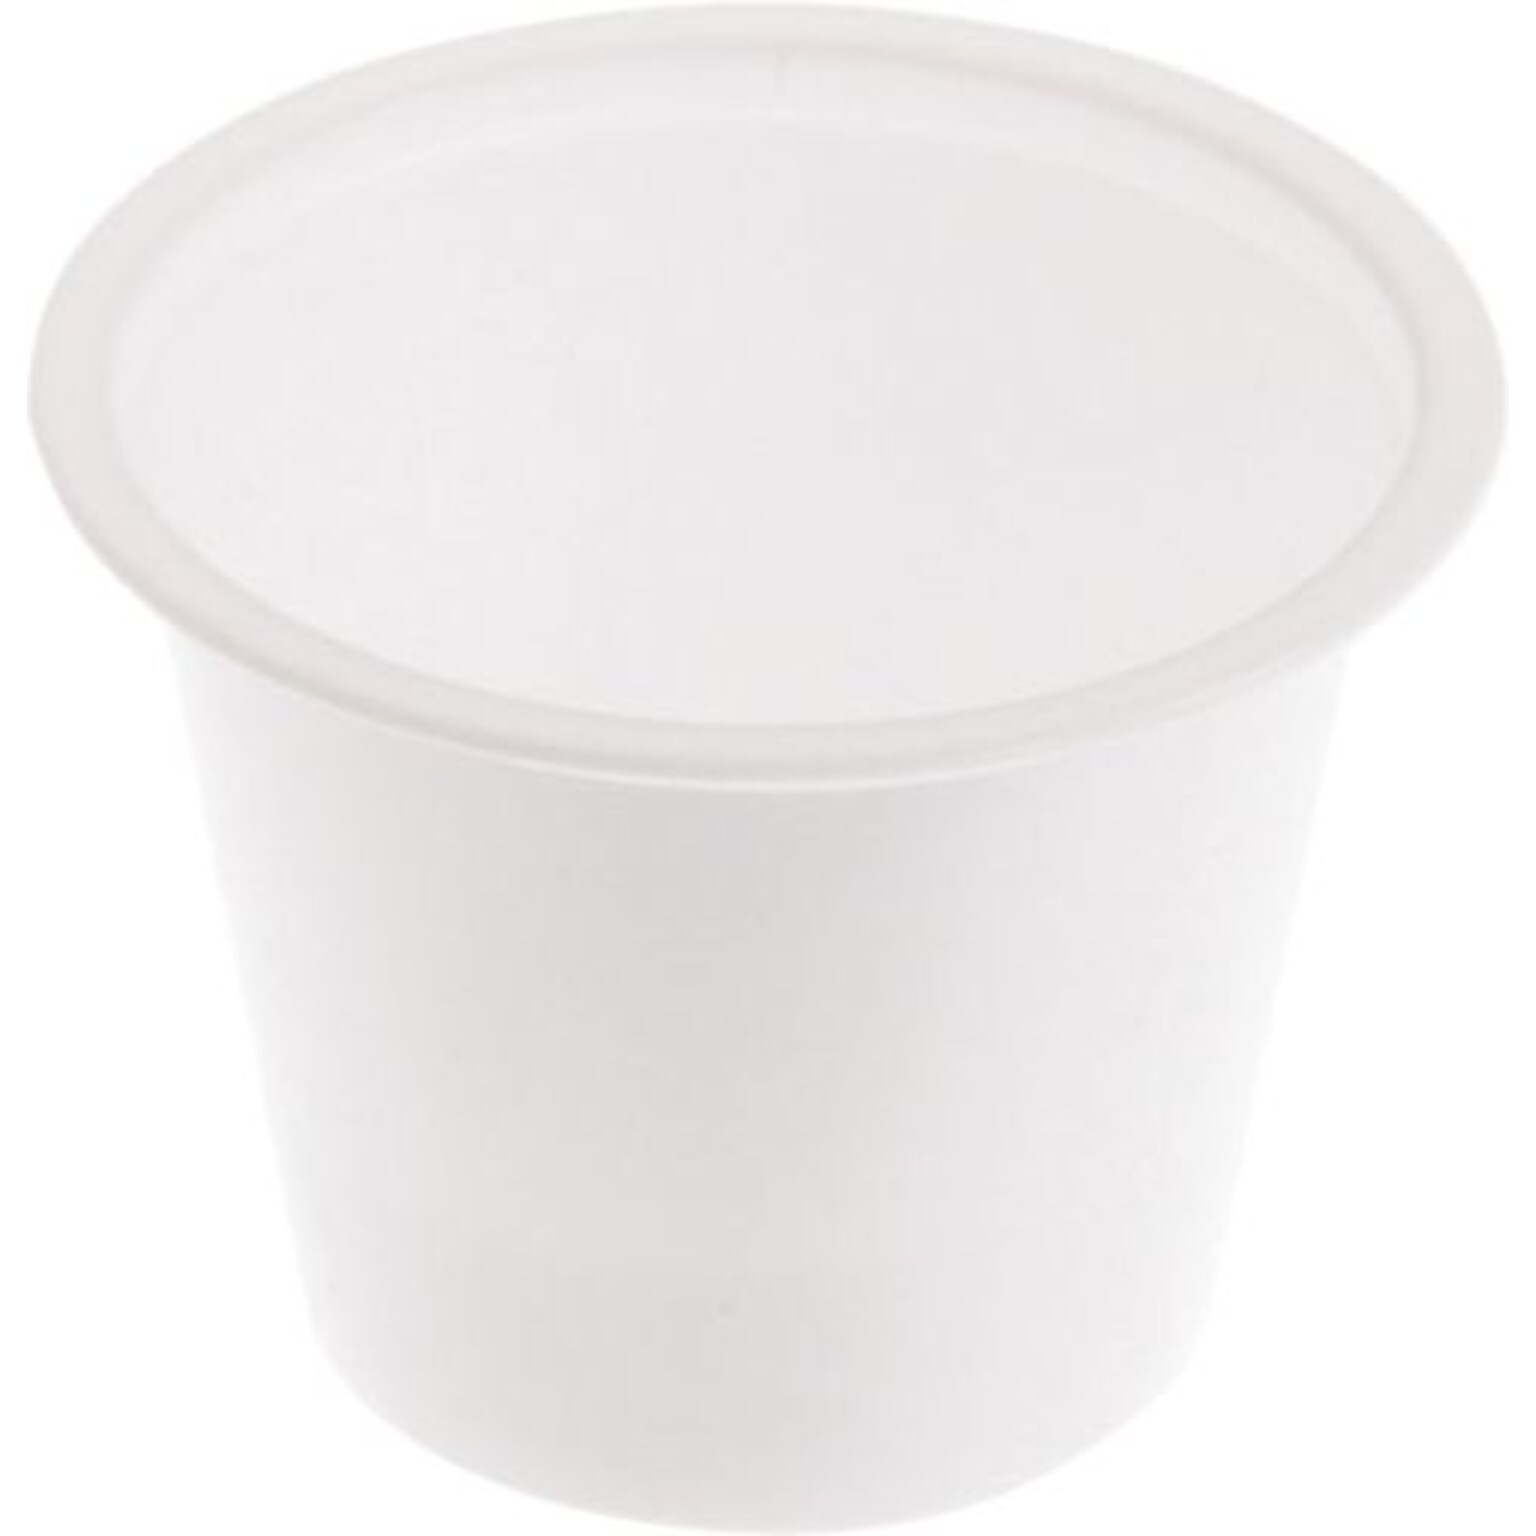 Medline Souffle .75 oz Plastic Cups, White, 5000/Pack (NON034215)